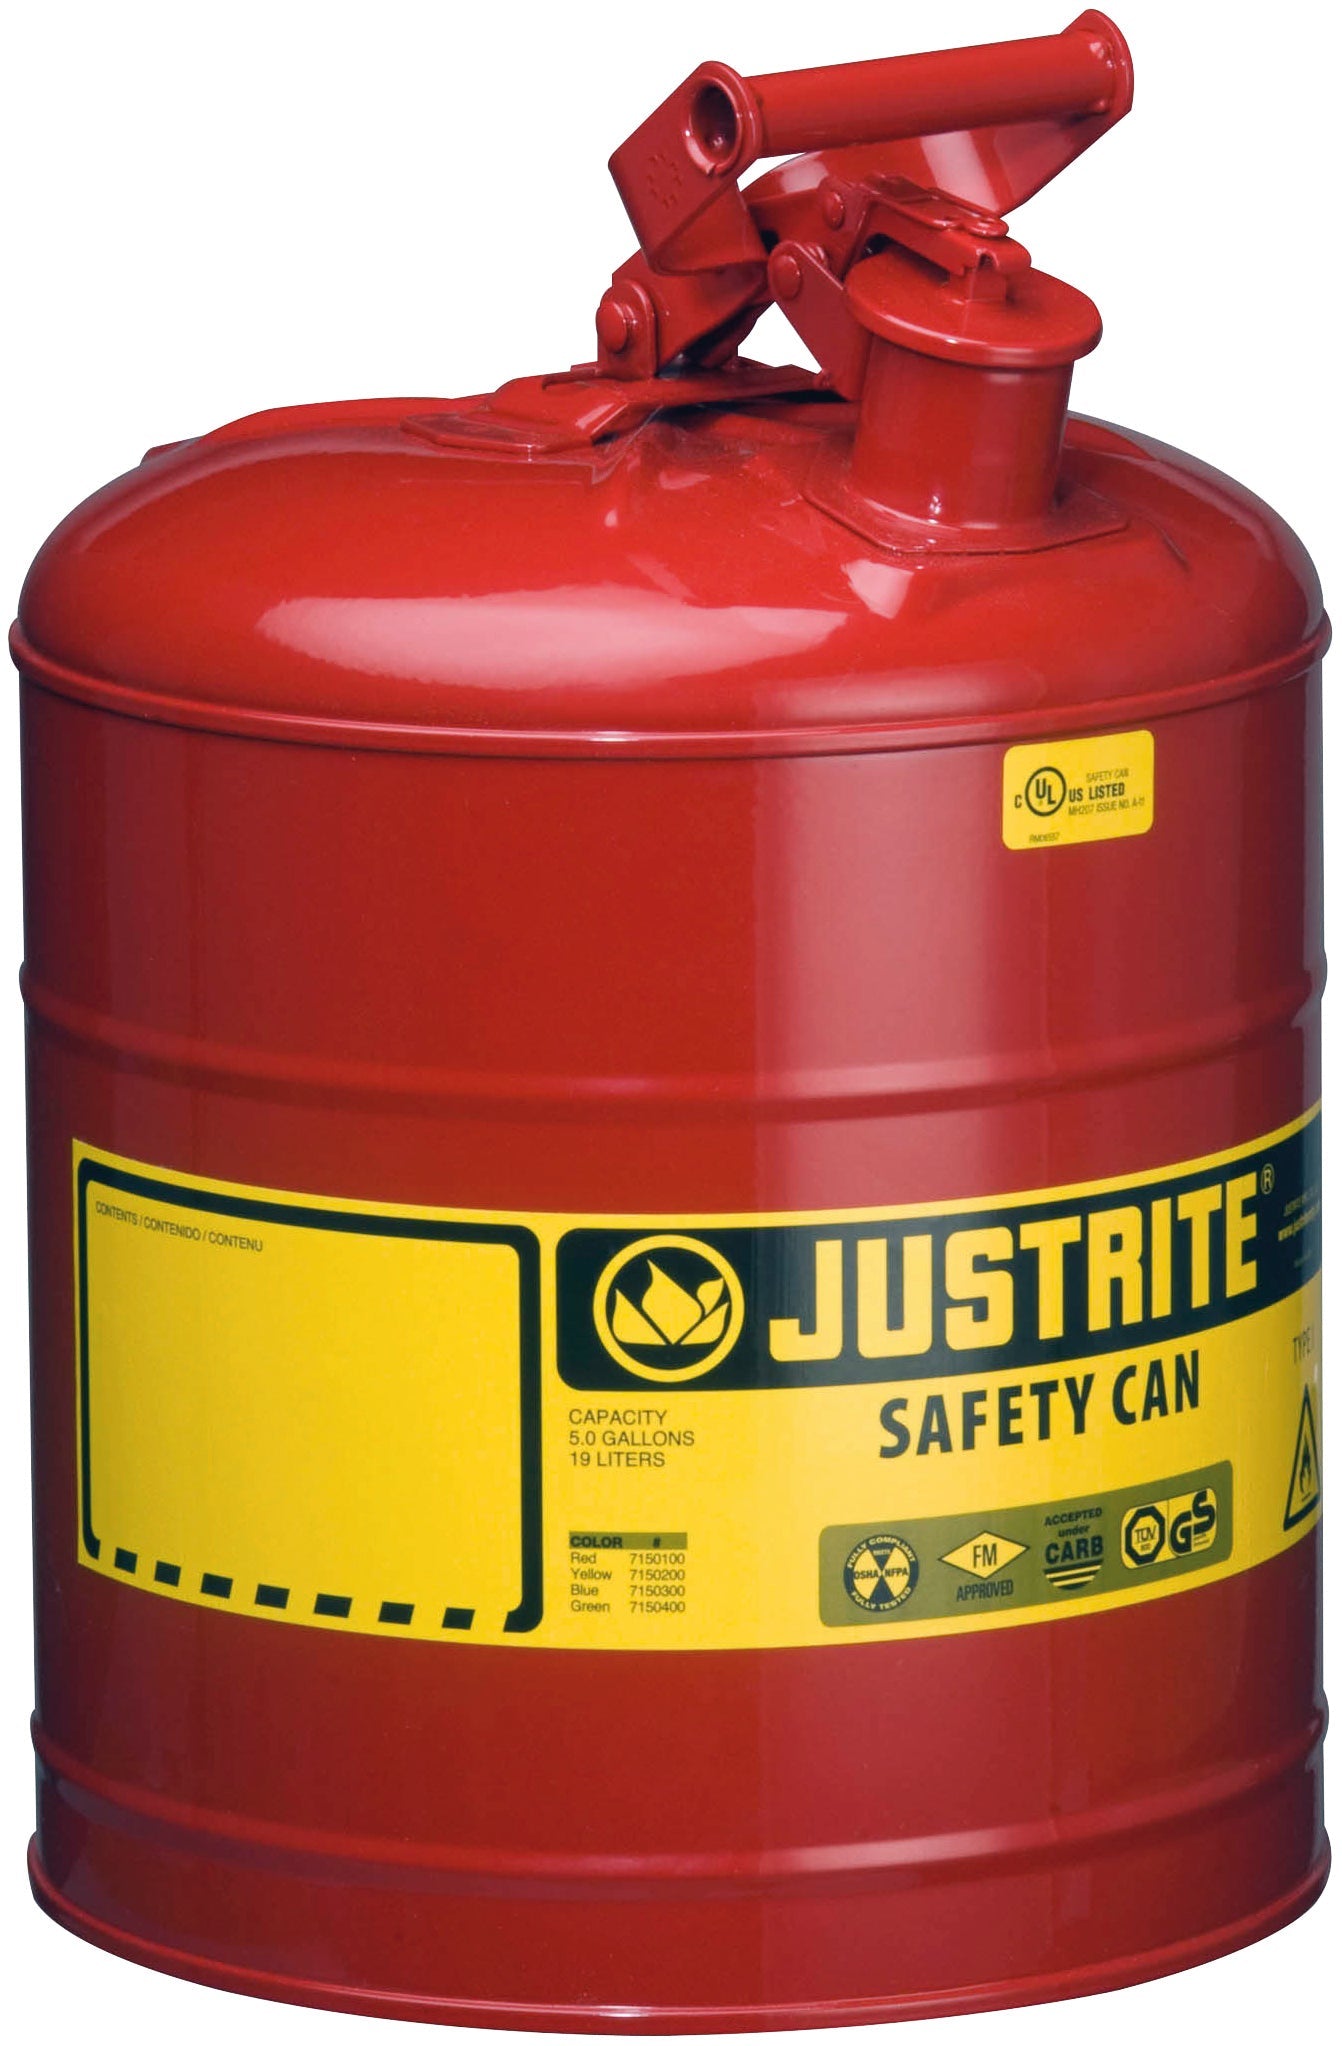 Sicherheitsbehälter Stahlblech pulverbeschichtet Rot, Inhalt: 19 Liter, Stahlblech pulverbeschichtet glatt